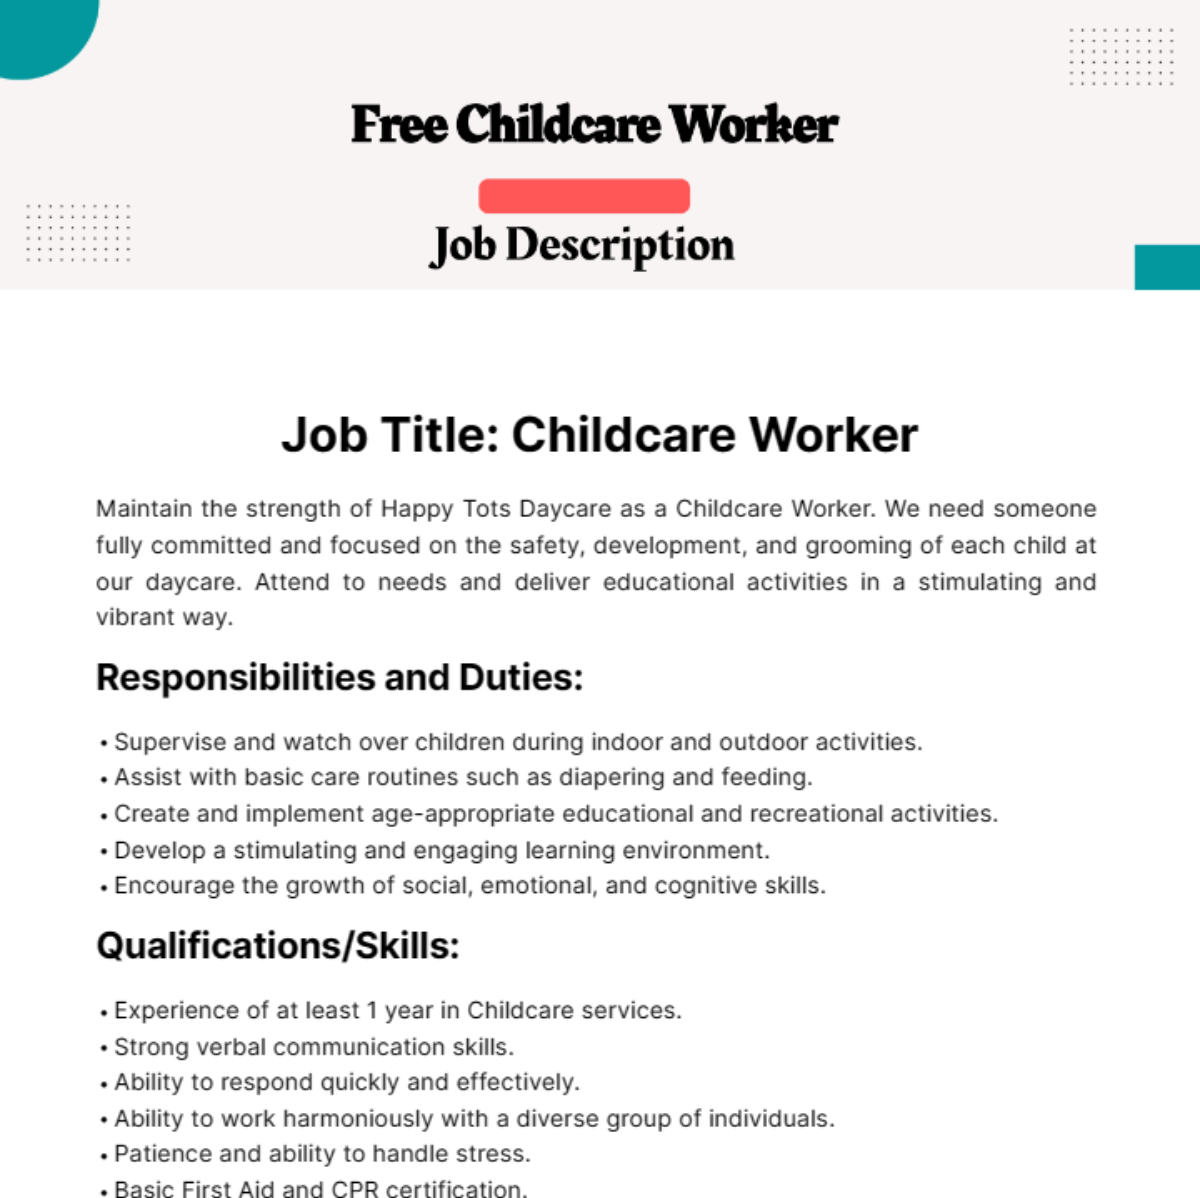 Free Childcare Worker Job Description Template